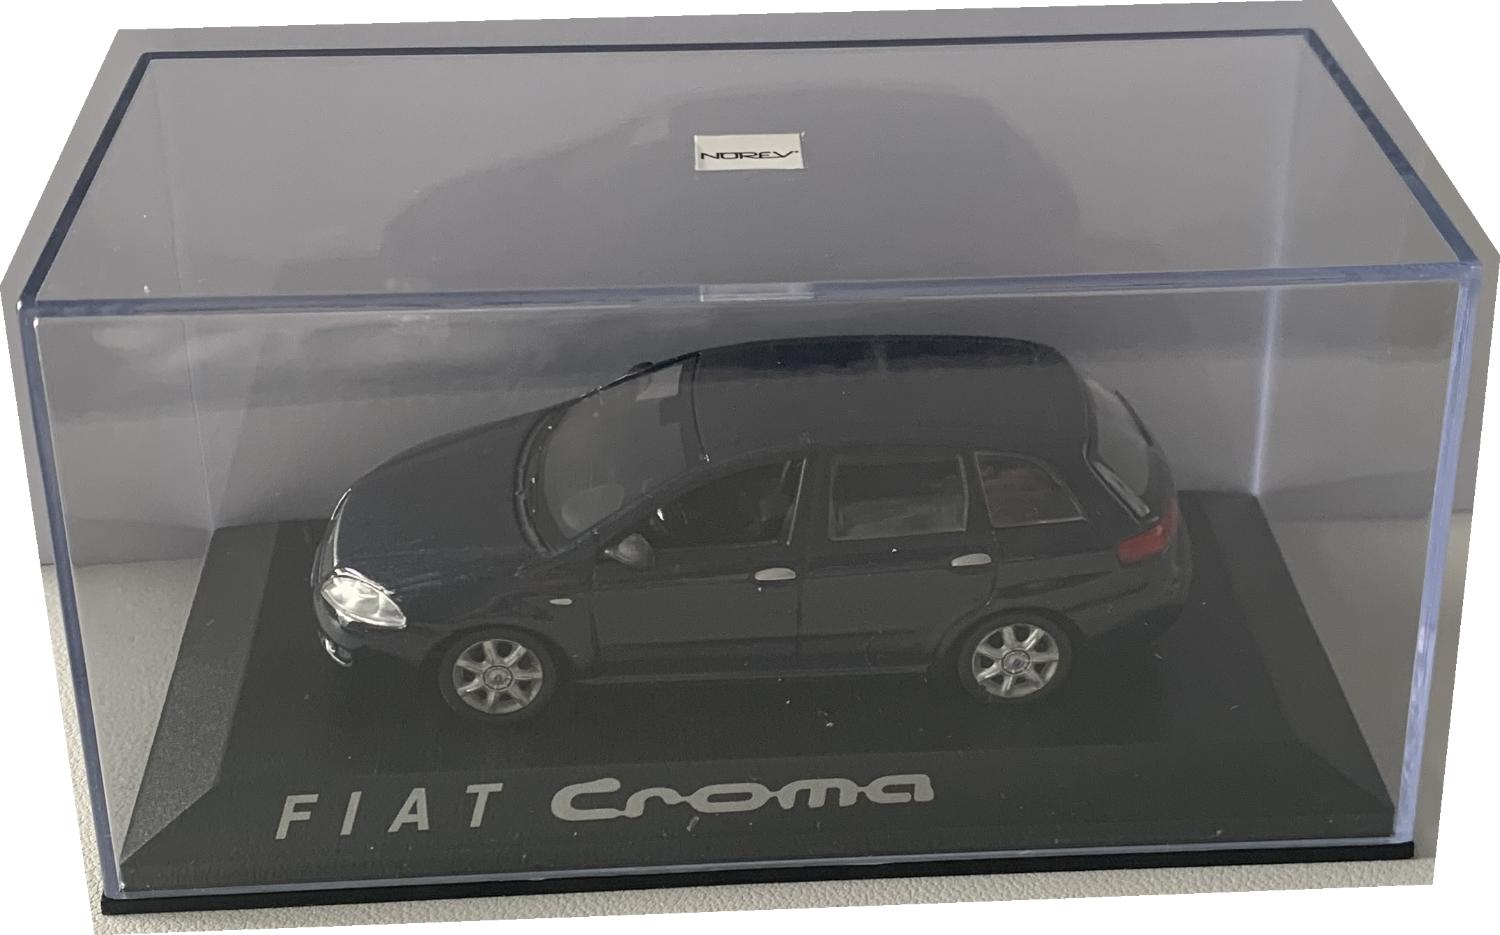 Fiat Croma 5 door estate in metallic charcoal 1:43 scale model from Norev, 771048